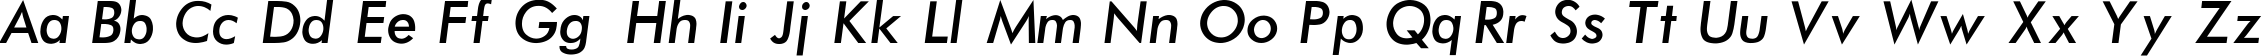 Пример написания английского алфавита шрифтом Futura-Normal-Italic